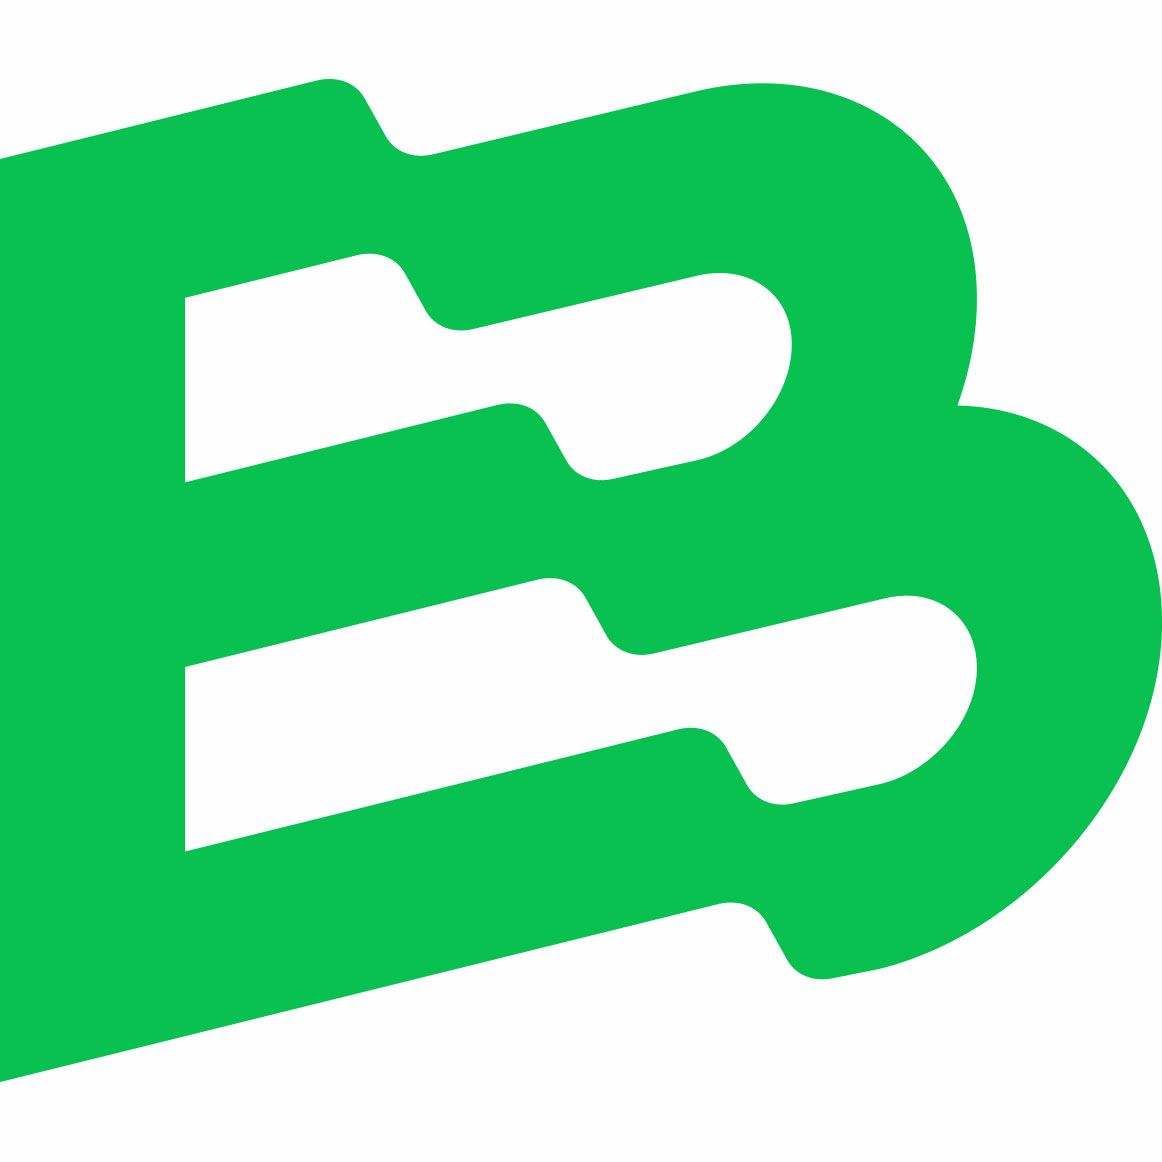 Bedrijfsnaam logo